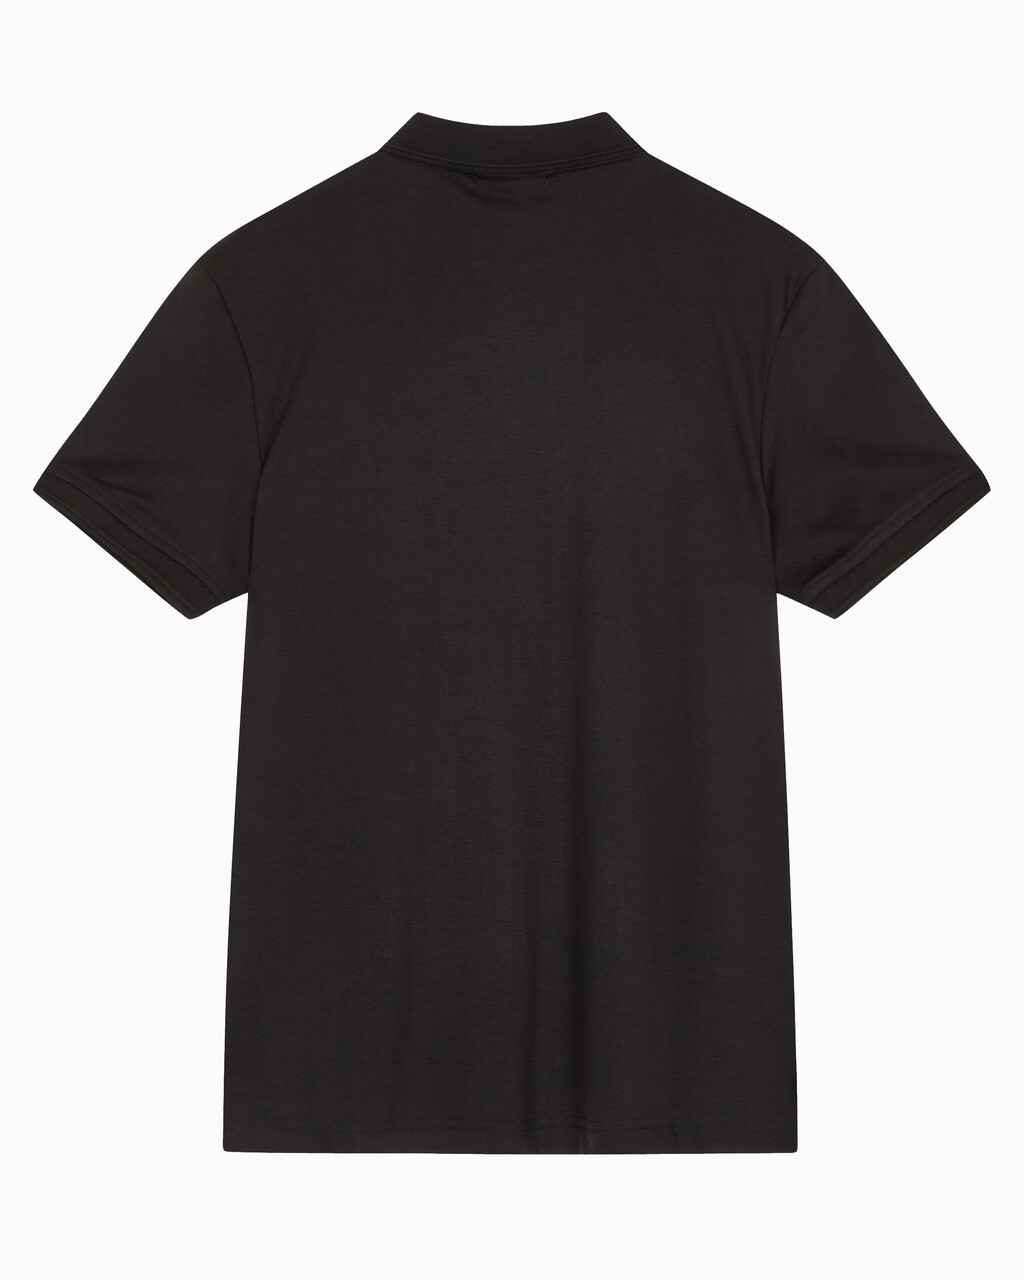 Buy 남성 톤온톤 로고 레귤러핏 폴로 반팔 티셔츠 in color CK BLACK